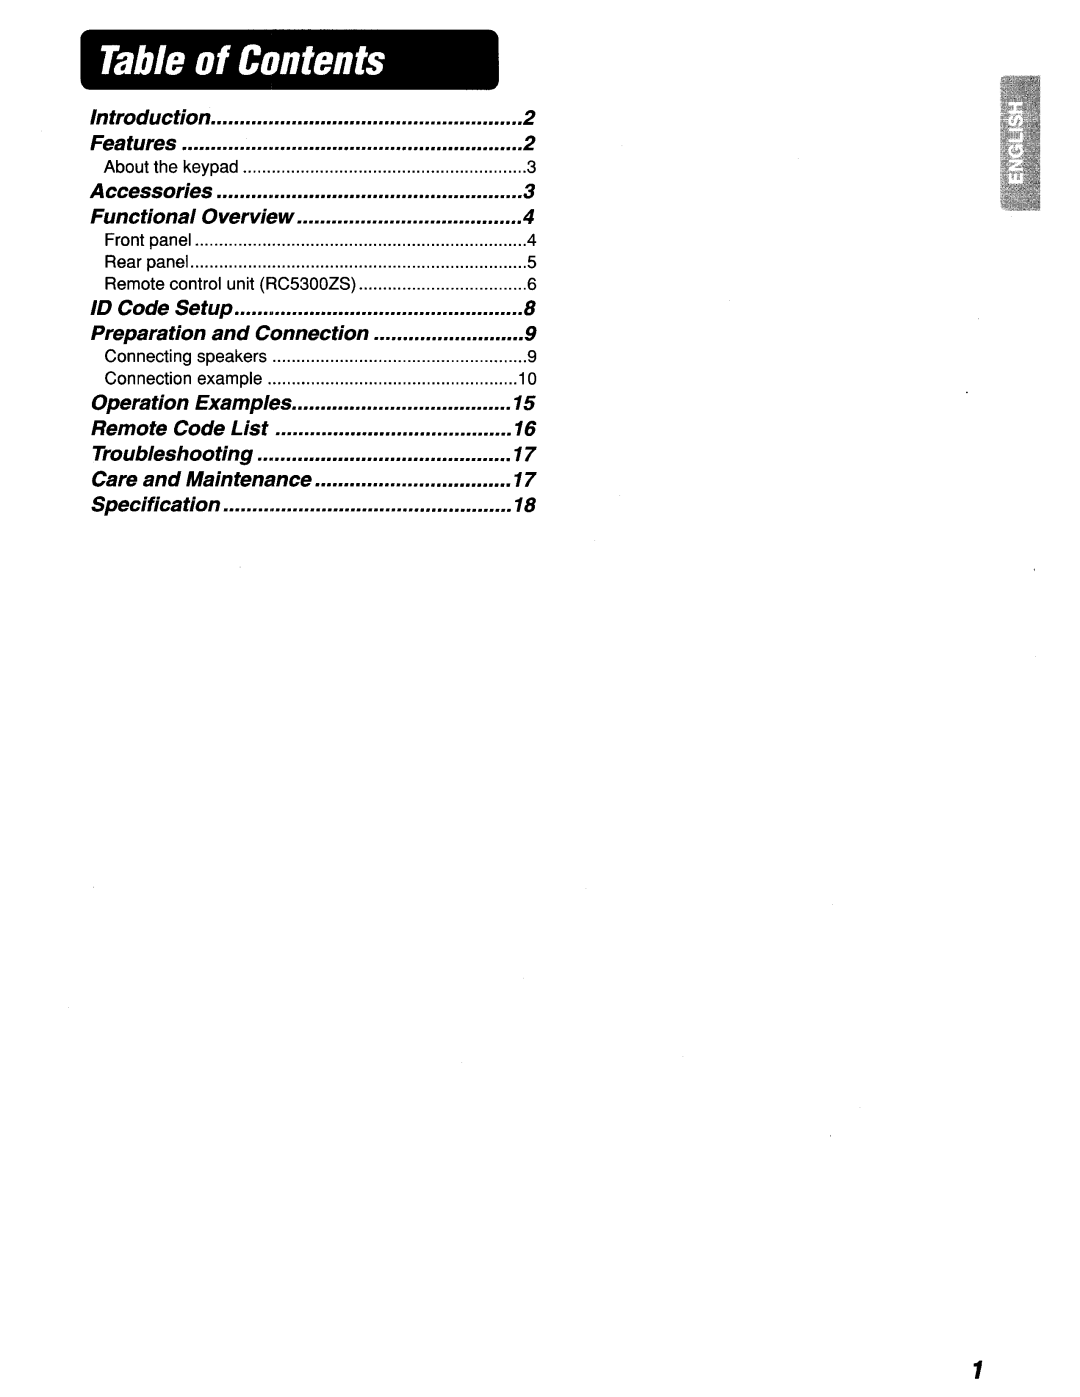 Marantz ZS5300 manual Table of Contents, Introduction 